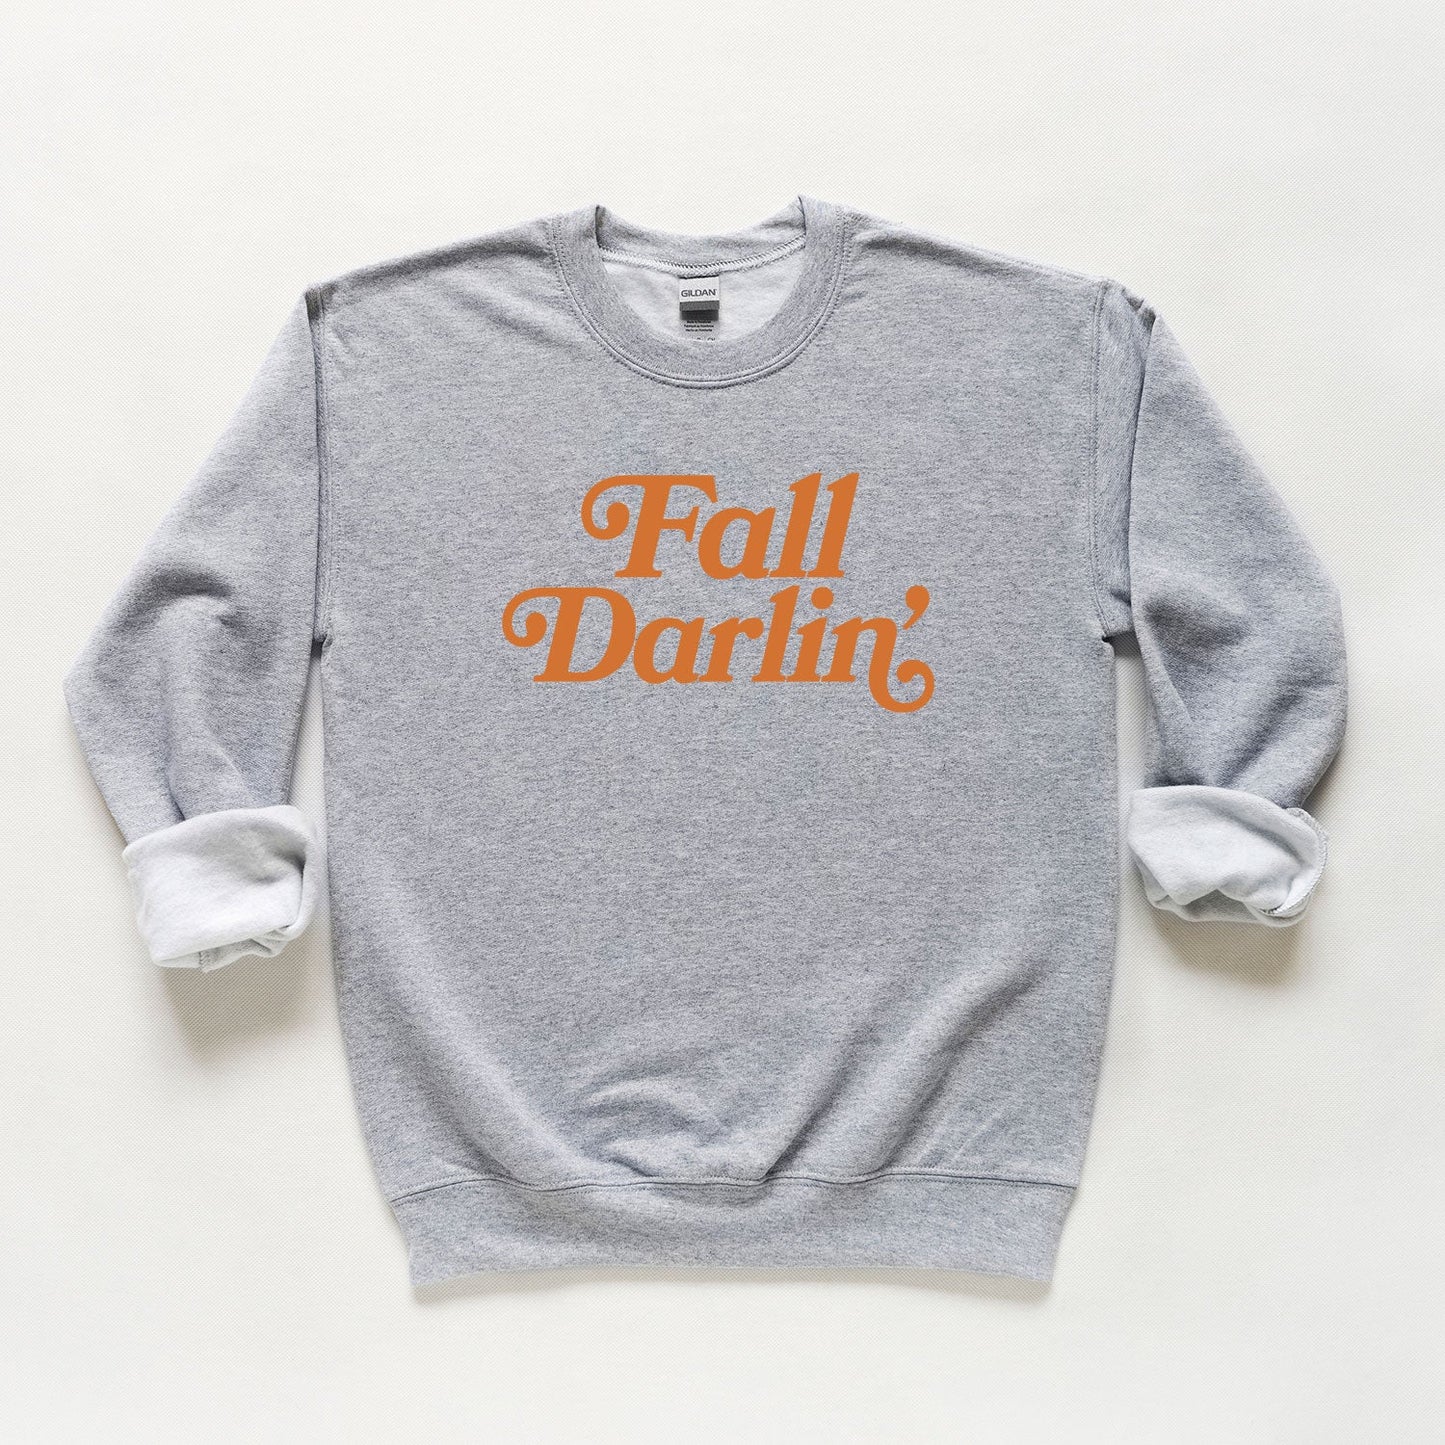 Fall Darlin' | Youth Graphic Sweatshirt